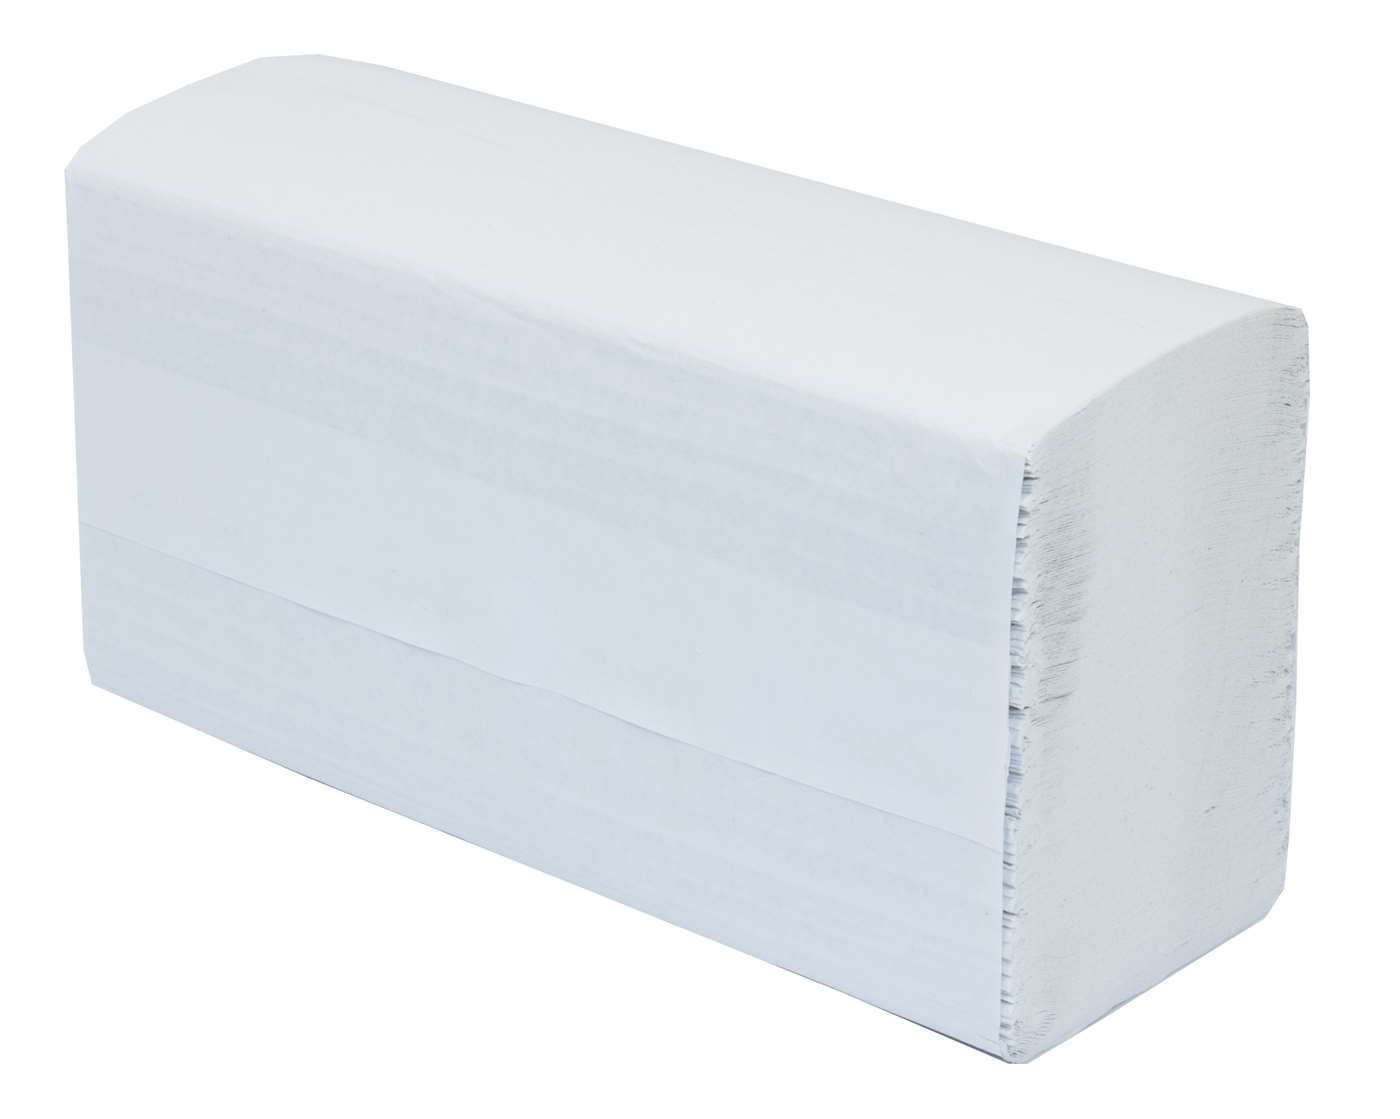 PRO Z-Fold White 1 Ply Paper Towel